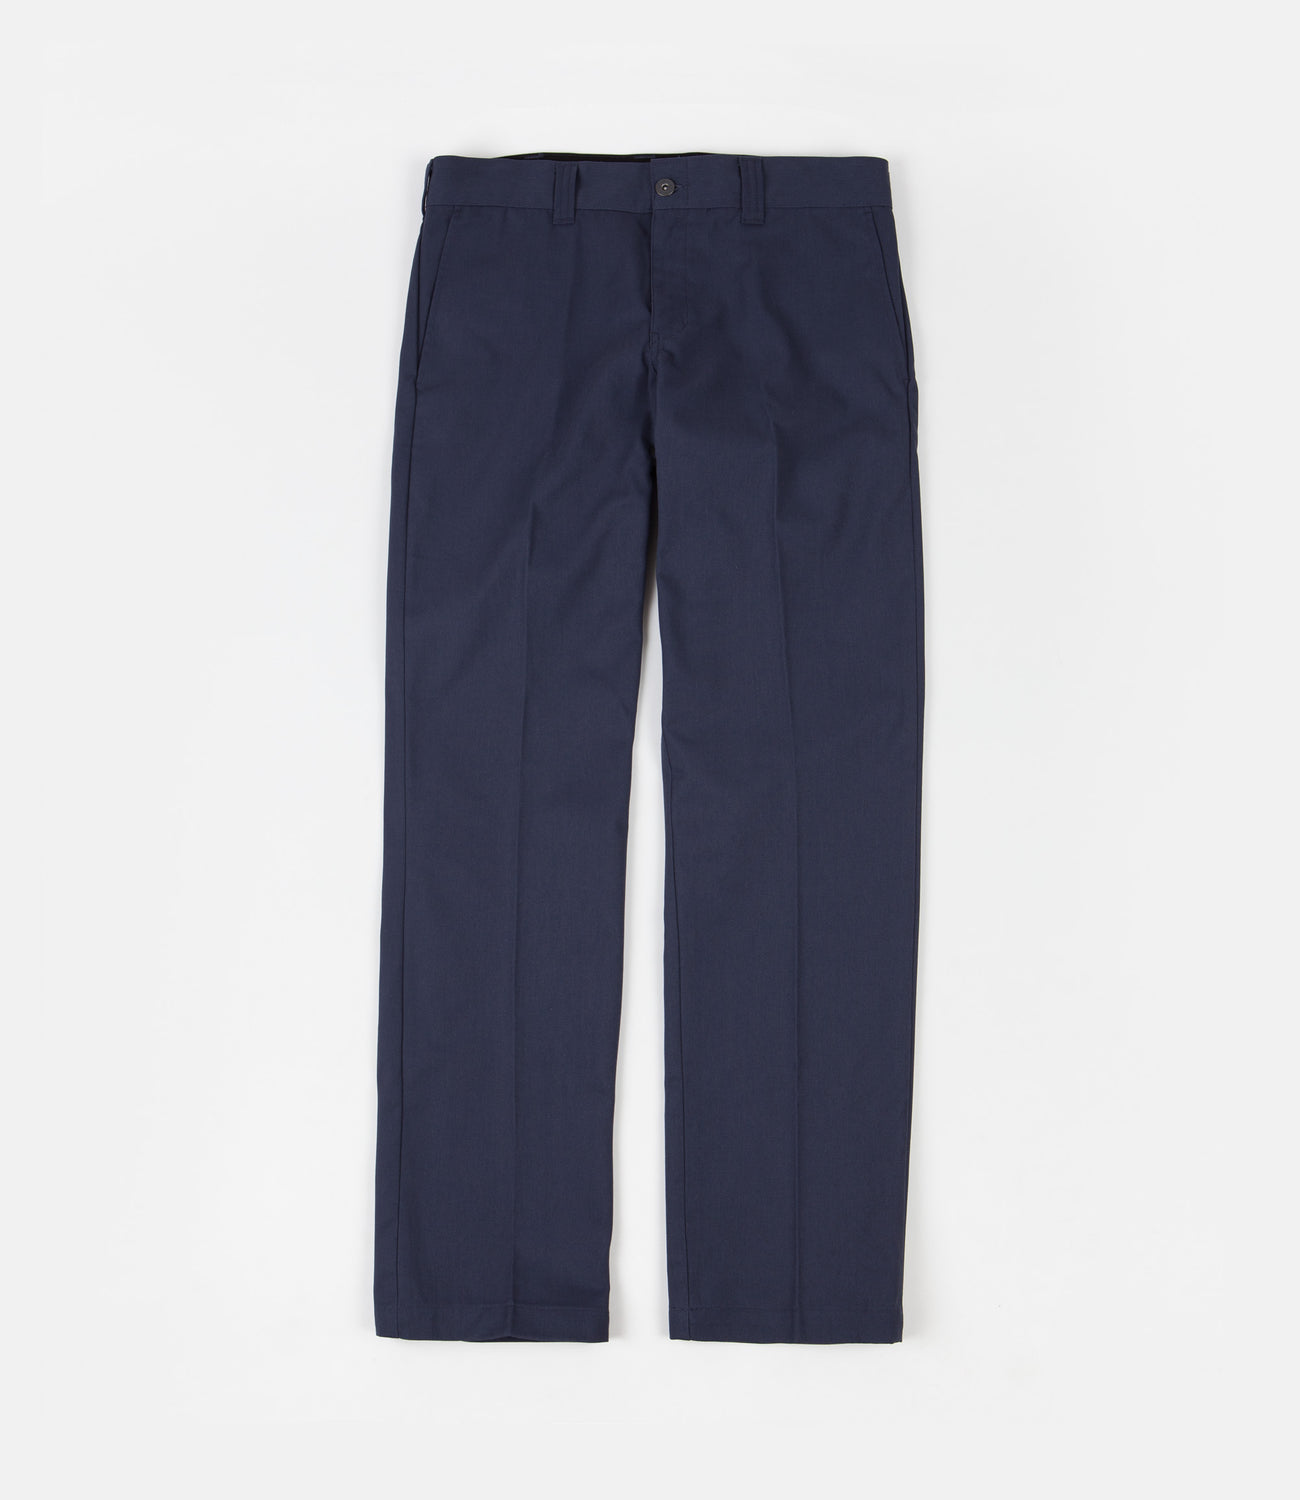 Dickies 894 Industrial Work Trousers - Navy Blue | Flatspot